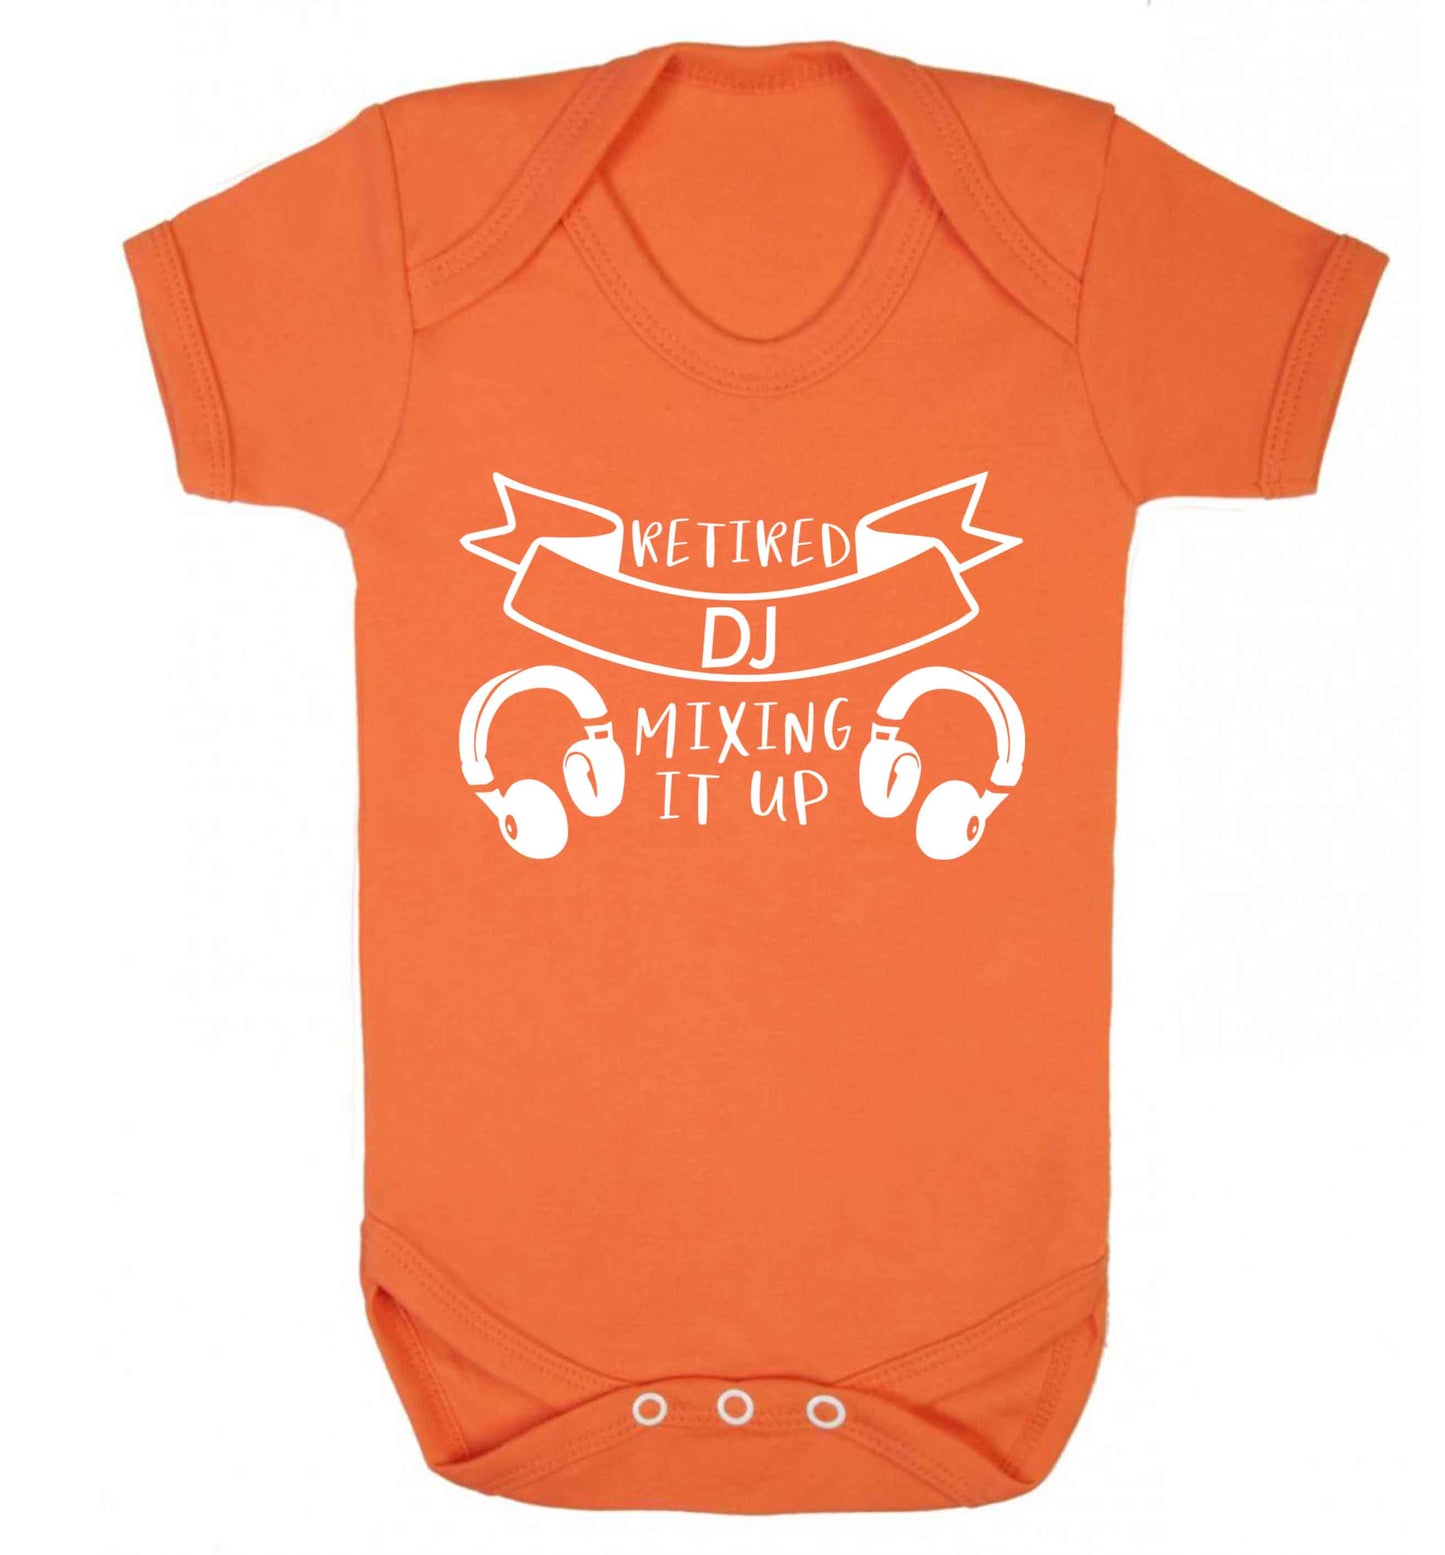 Retired DJ mixing it up Baby Vest orange 18-24 months